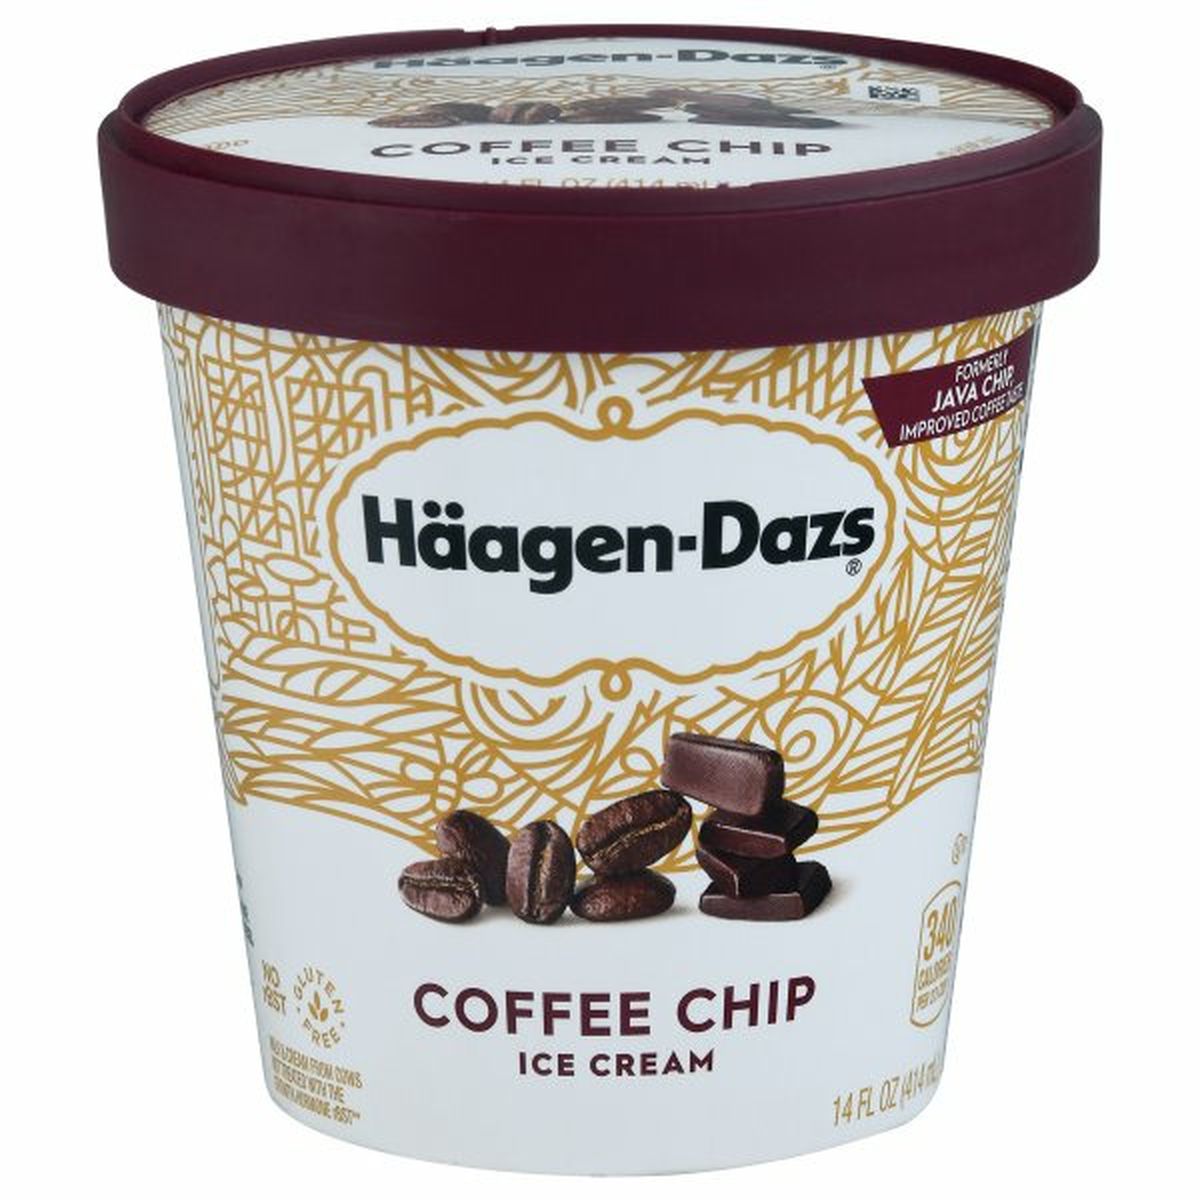 Calories in Haagen-Dazs Ice Cream, Coffee Chip